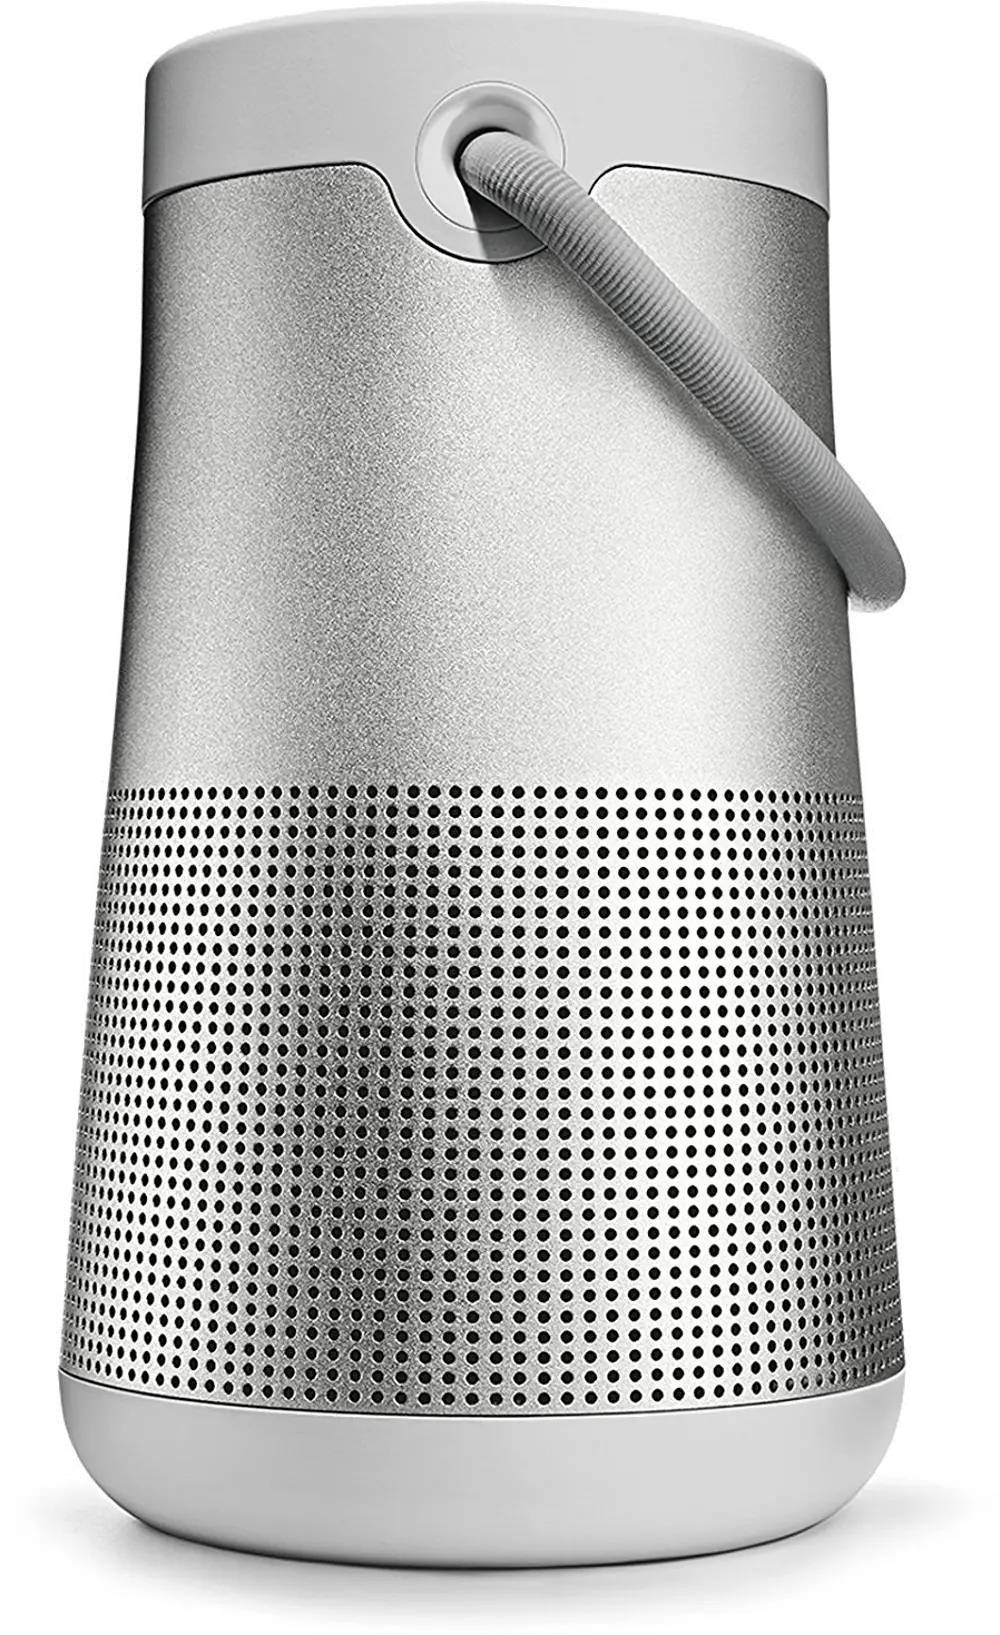 SNDLNK-REVOLVE+,GRY Bose SoundLink Revolve+ Bluetooth Speaker - Gray-1